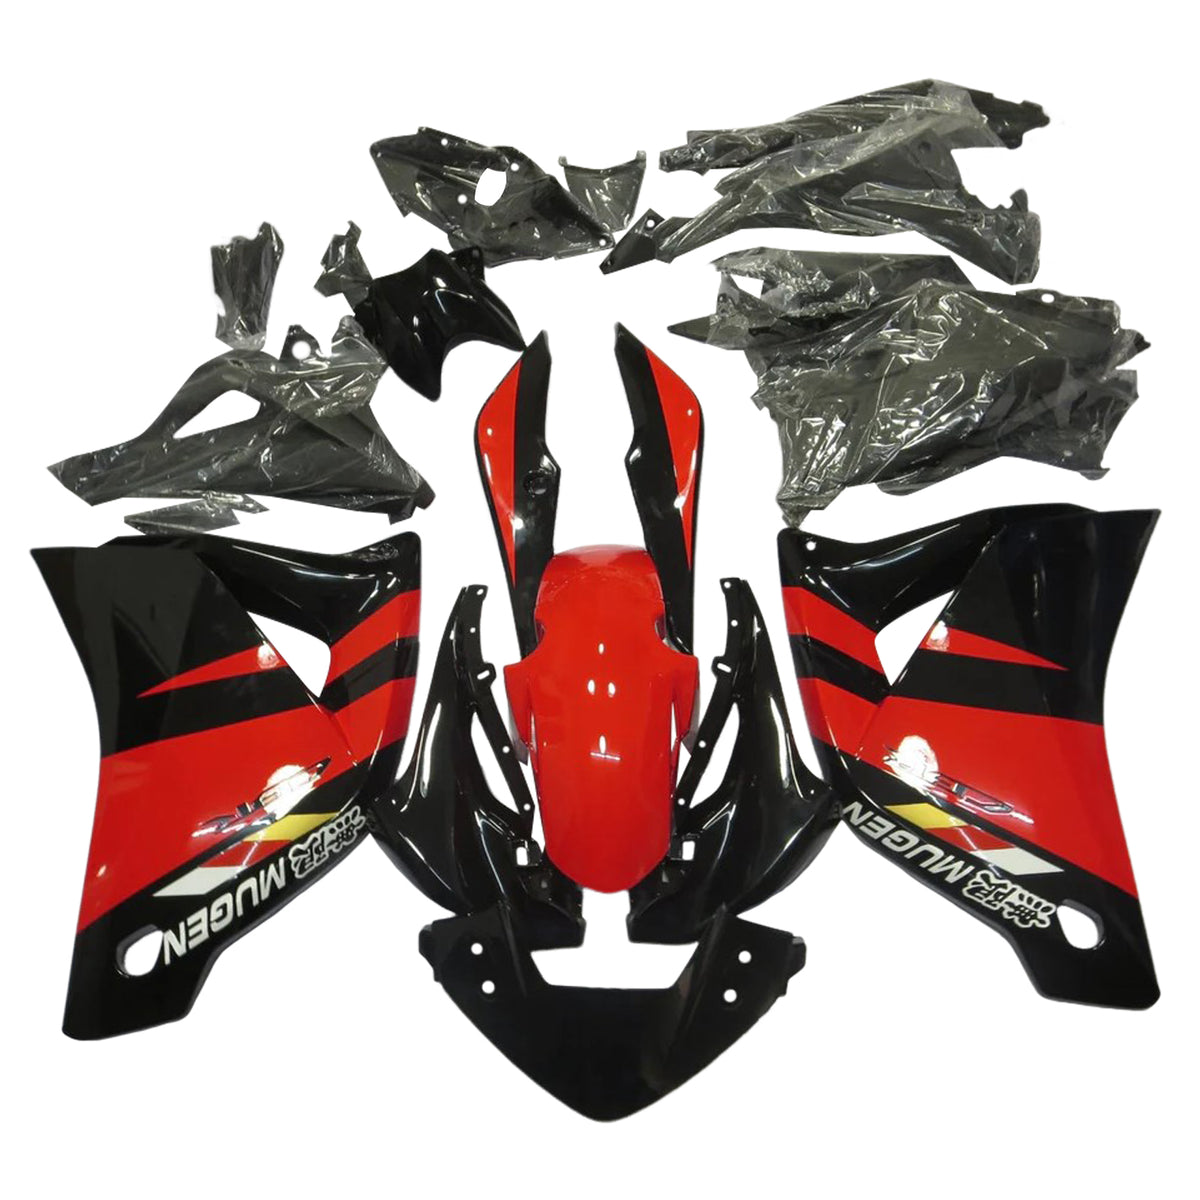 Kit carena Amotopart 2011-2015 CBR250R Honda nero e rosso